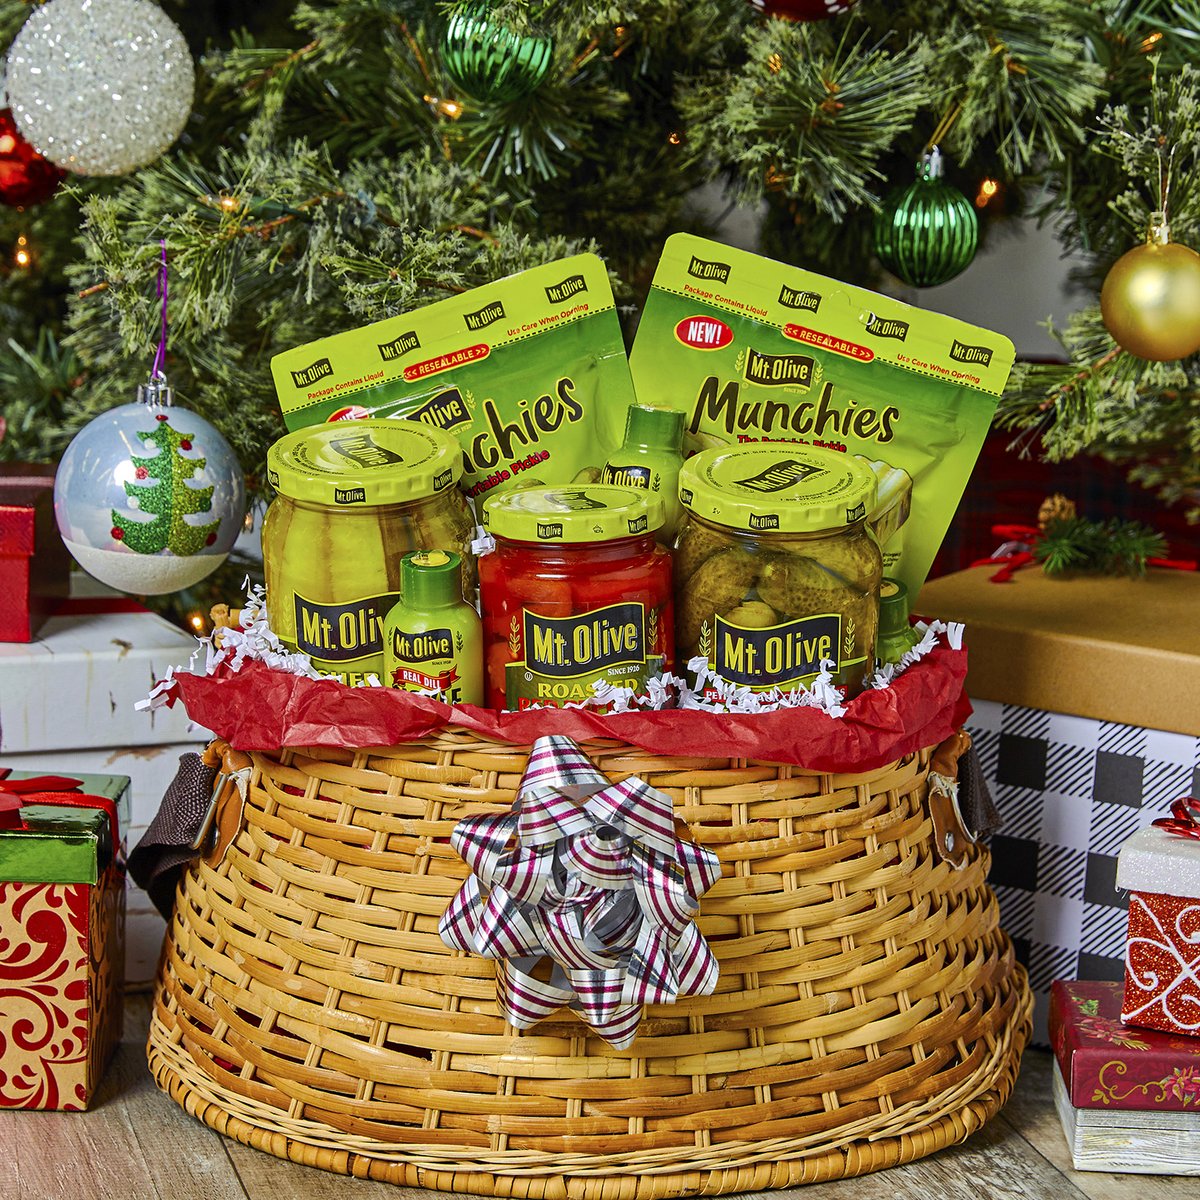 🎁 Last minute gift idea: Fill a basket with their favorite Mt. Olive Pickles & Peppers!

#Pickles #Pickle #PickleLover #PickleLovers #ILovePickles #GiftIdeas #GiftsforFoodies #Foodie #KosherDillPickles #KosherDill #PickleJuice #PickleJuicers #Snacks #BestPickles #FavoritePickles